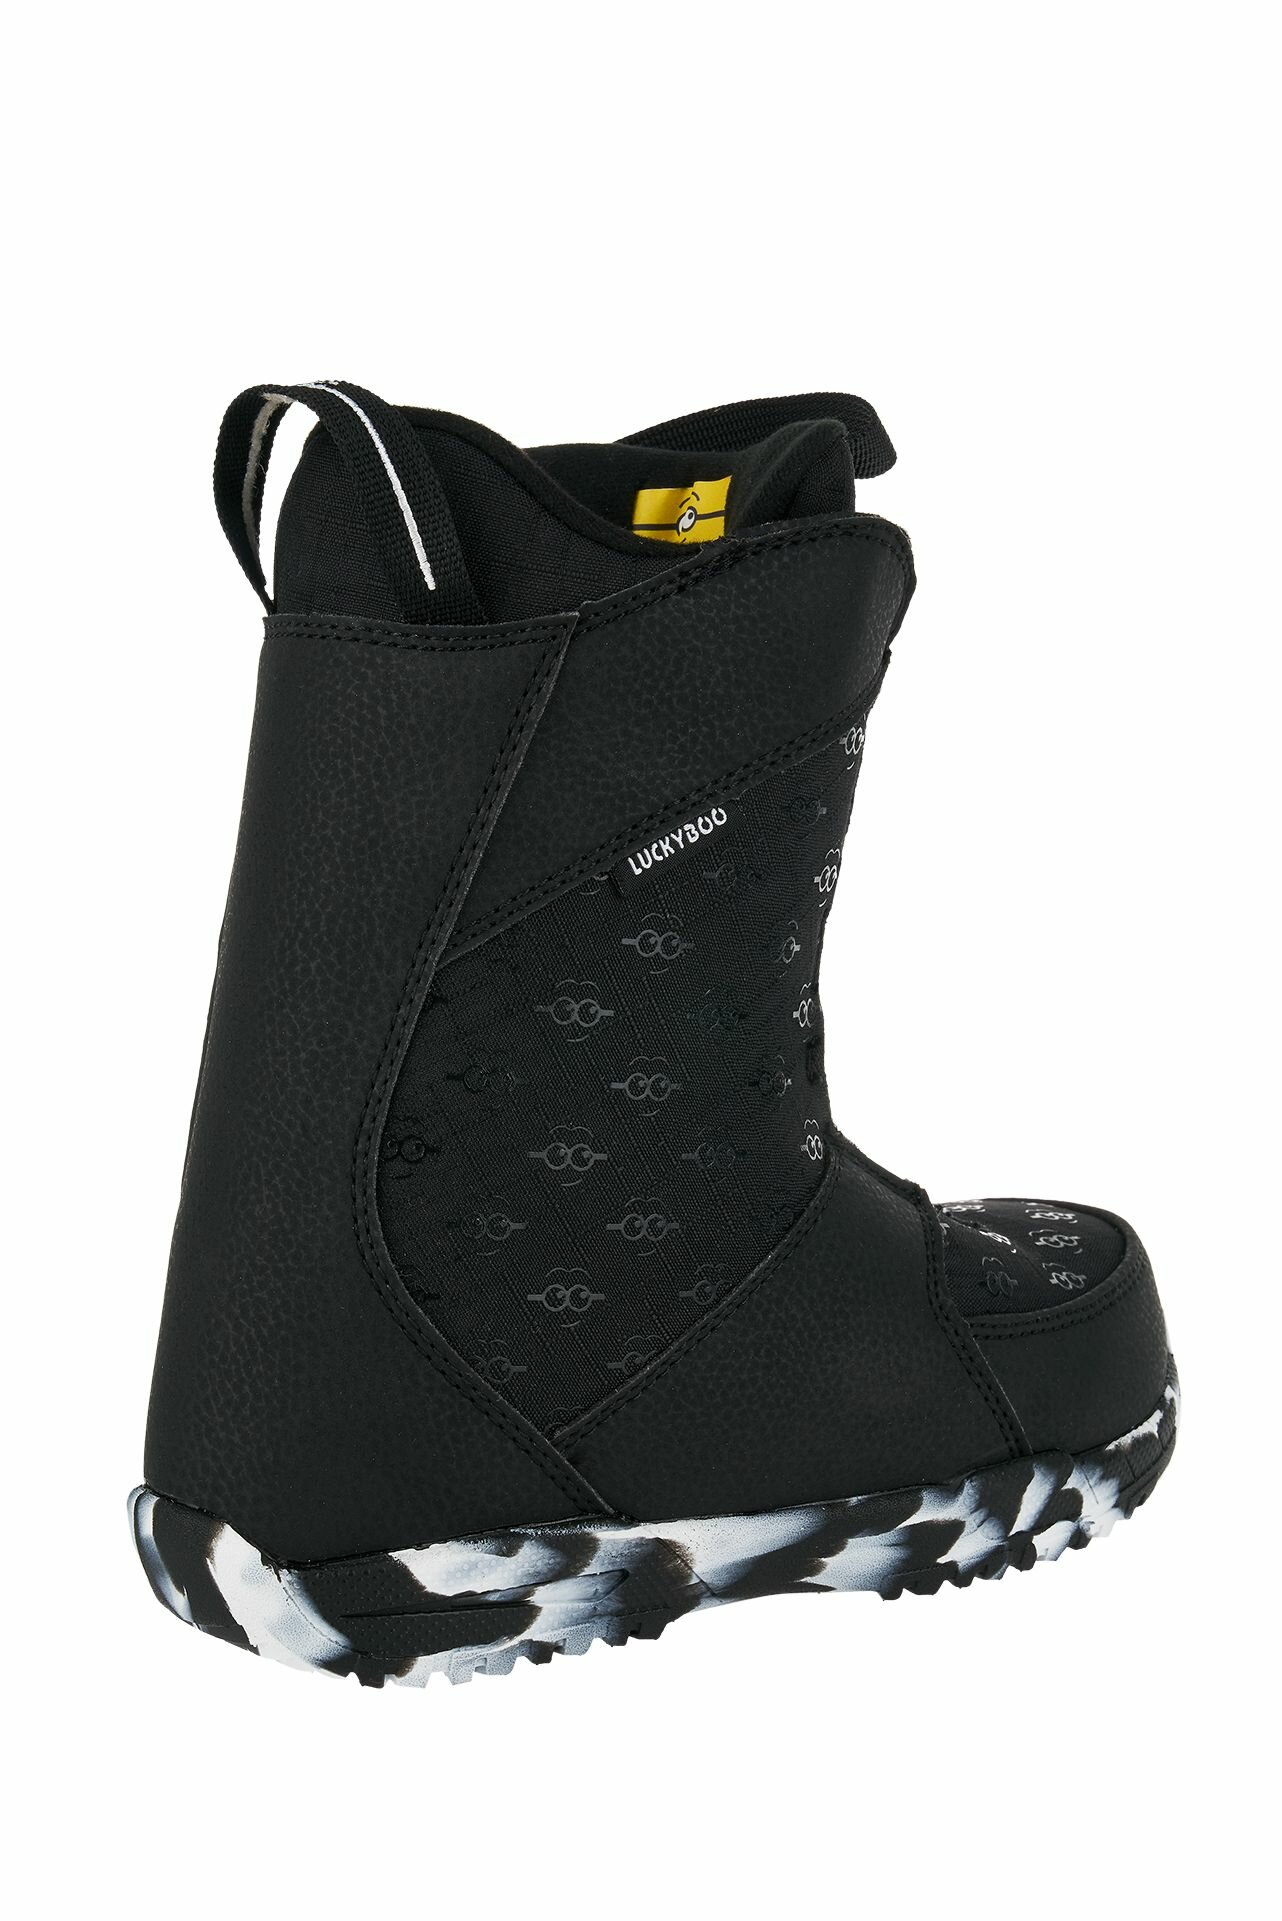 Ботинки сноубордические LUCKYBOO FUTURE FASTEC 23 cm